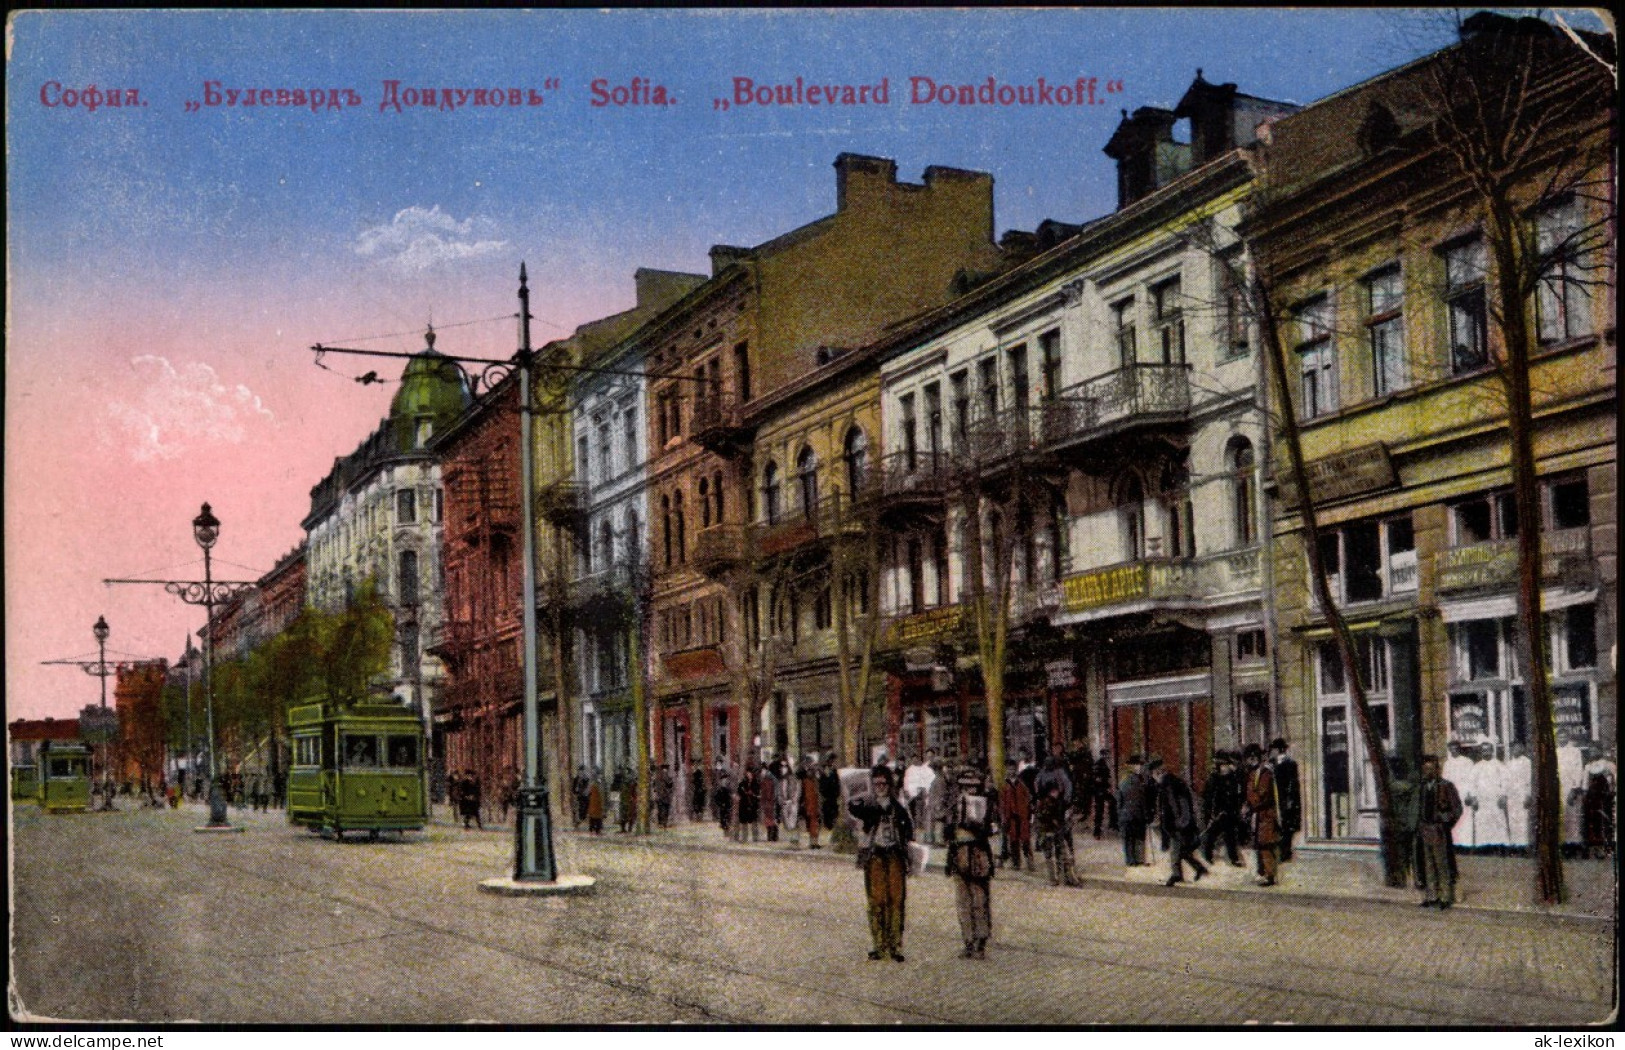 Sofia София ,,Булевардъ Дондуковь" Boulevard Dondoukoff" 1914 - Bulgarien